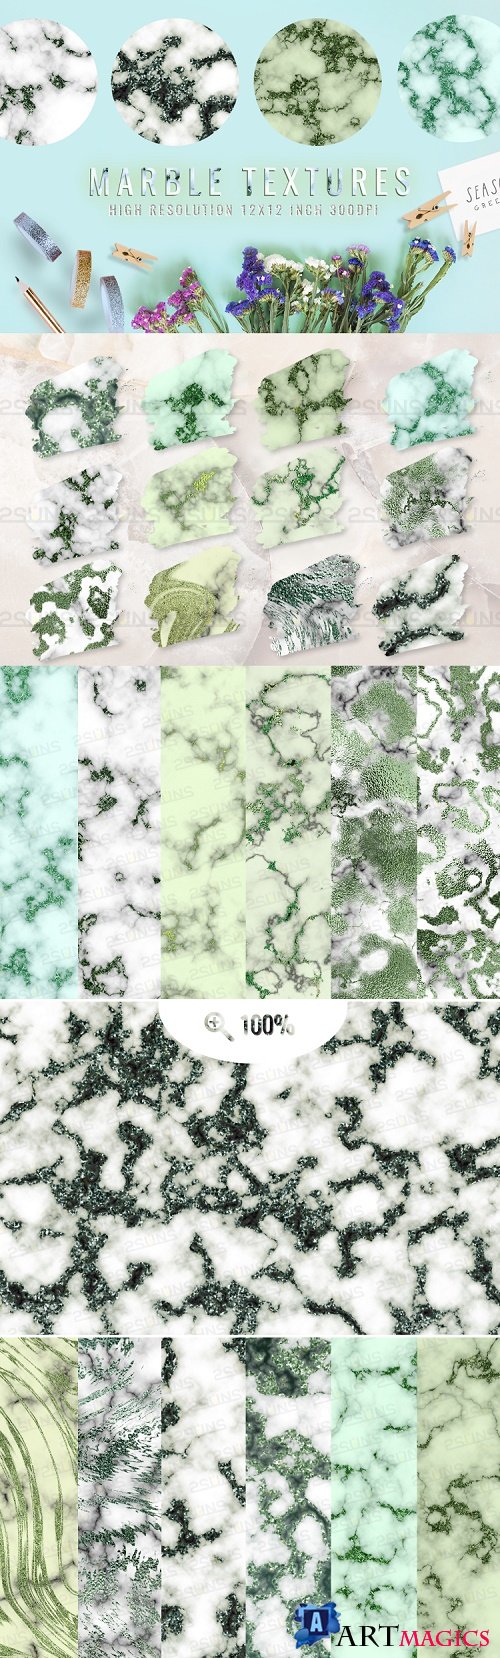 Emerald digital paper, green marble digital paper textures - 346687